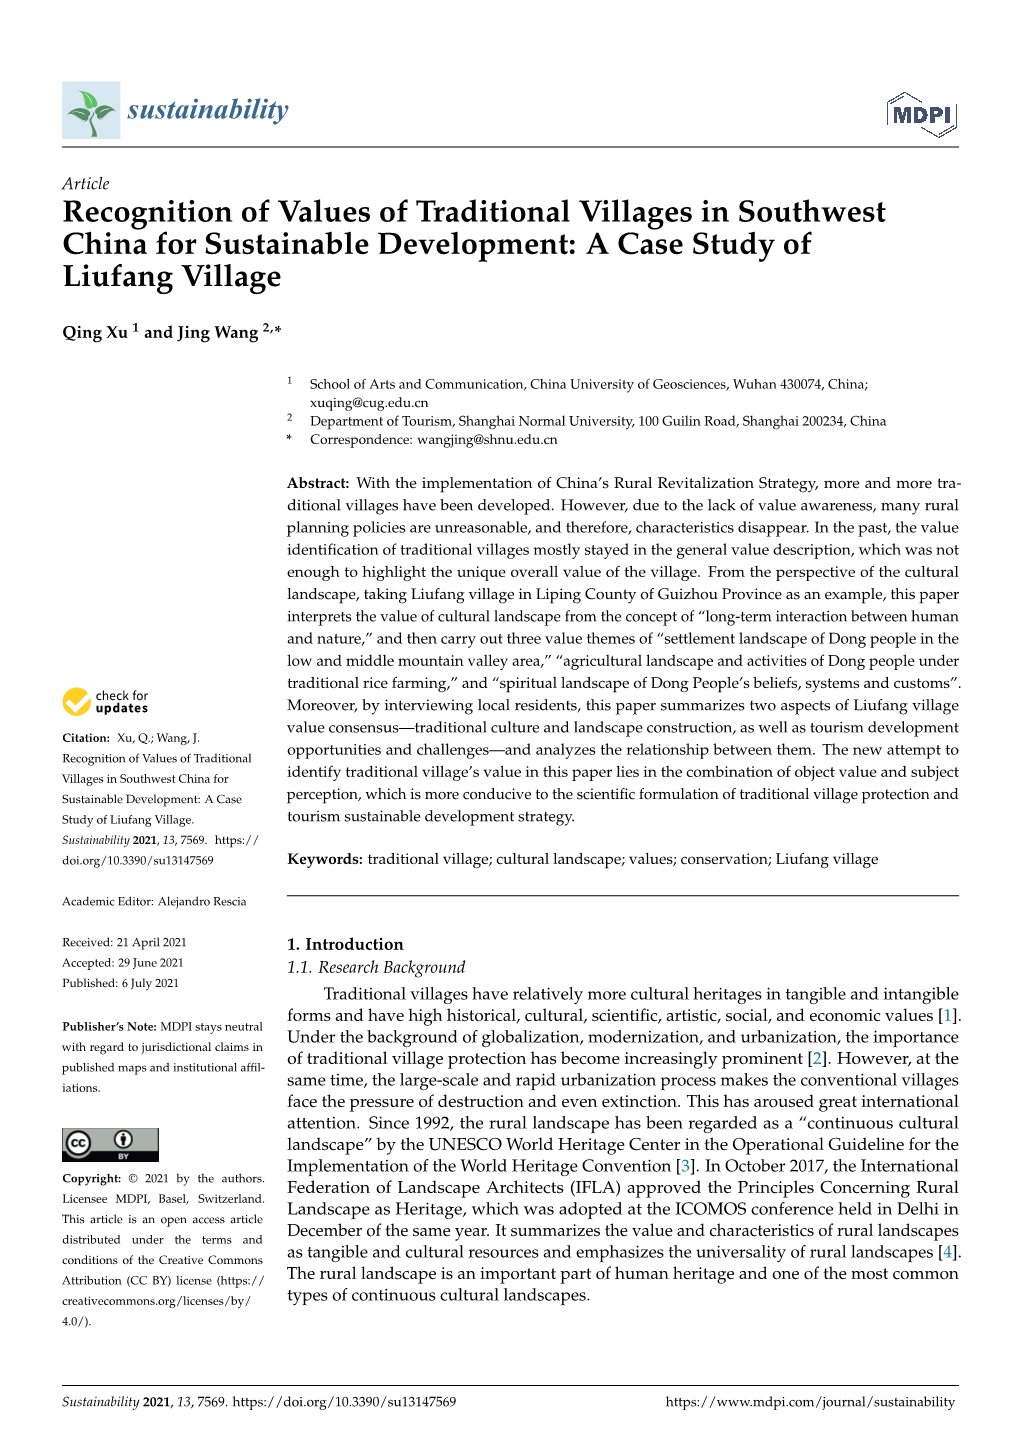 A Case Study of Liufang Village